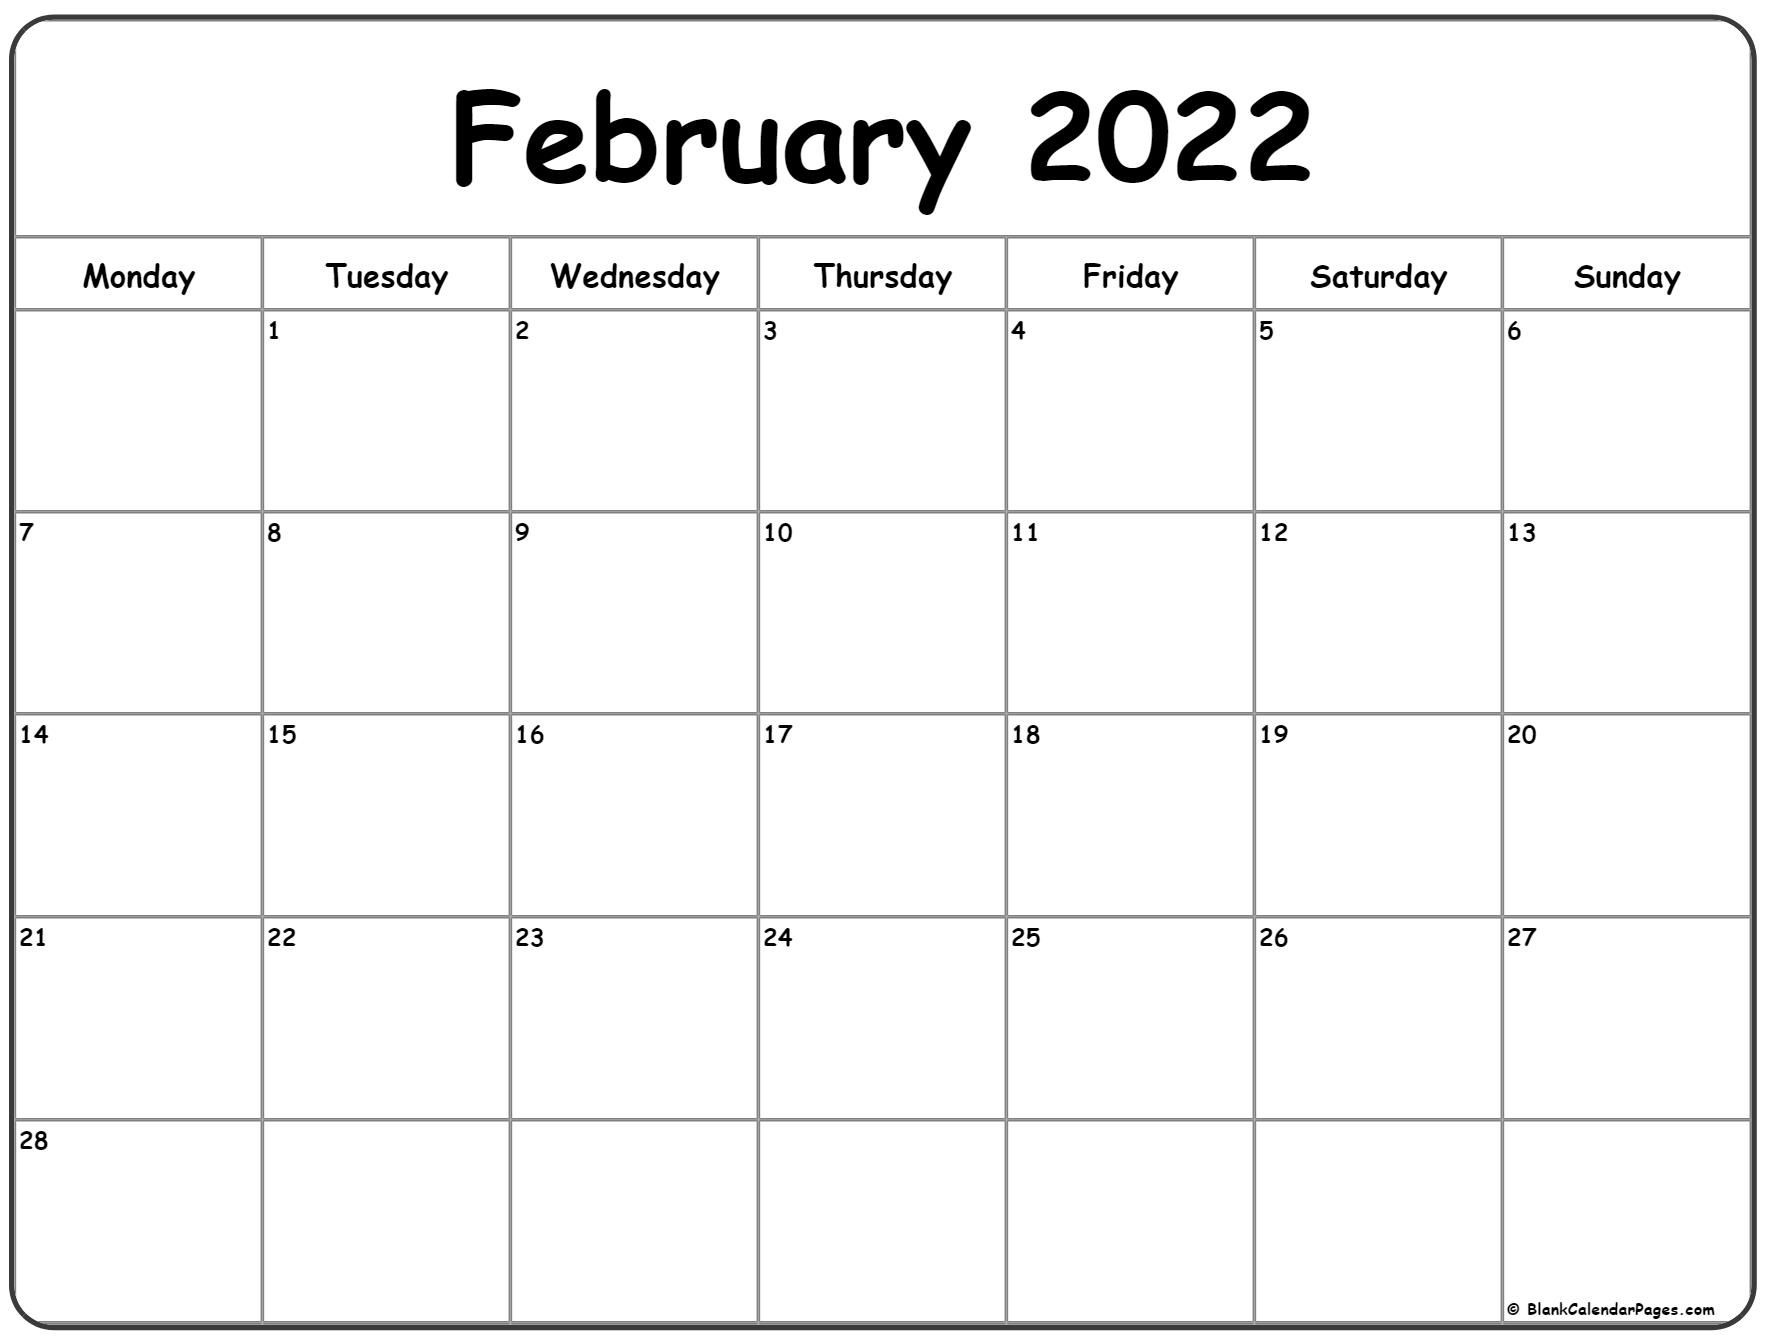 February 2022 Monday Calendar | Monday To Sunday